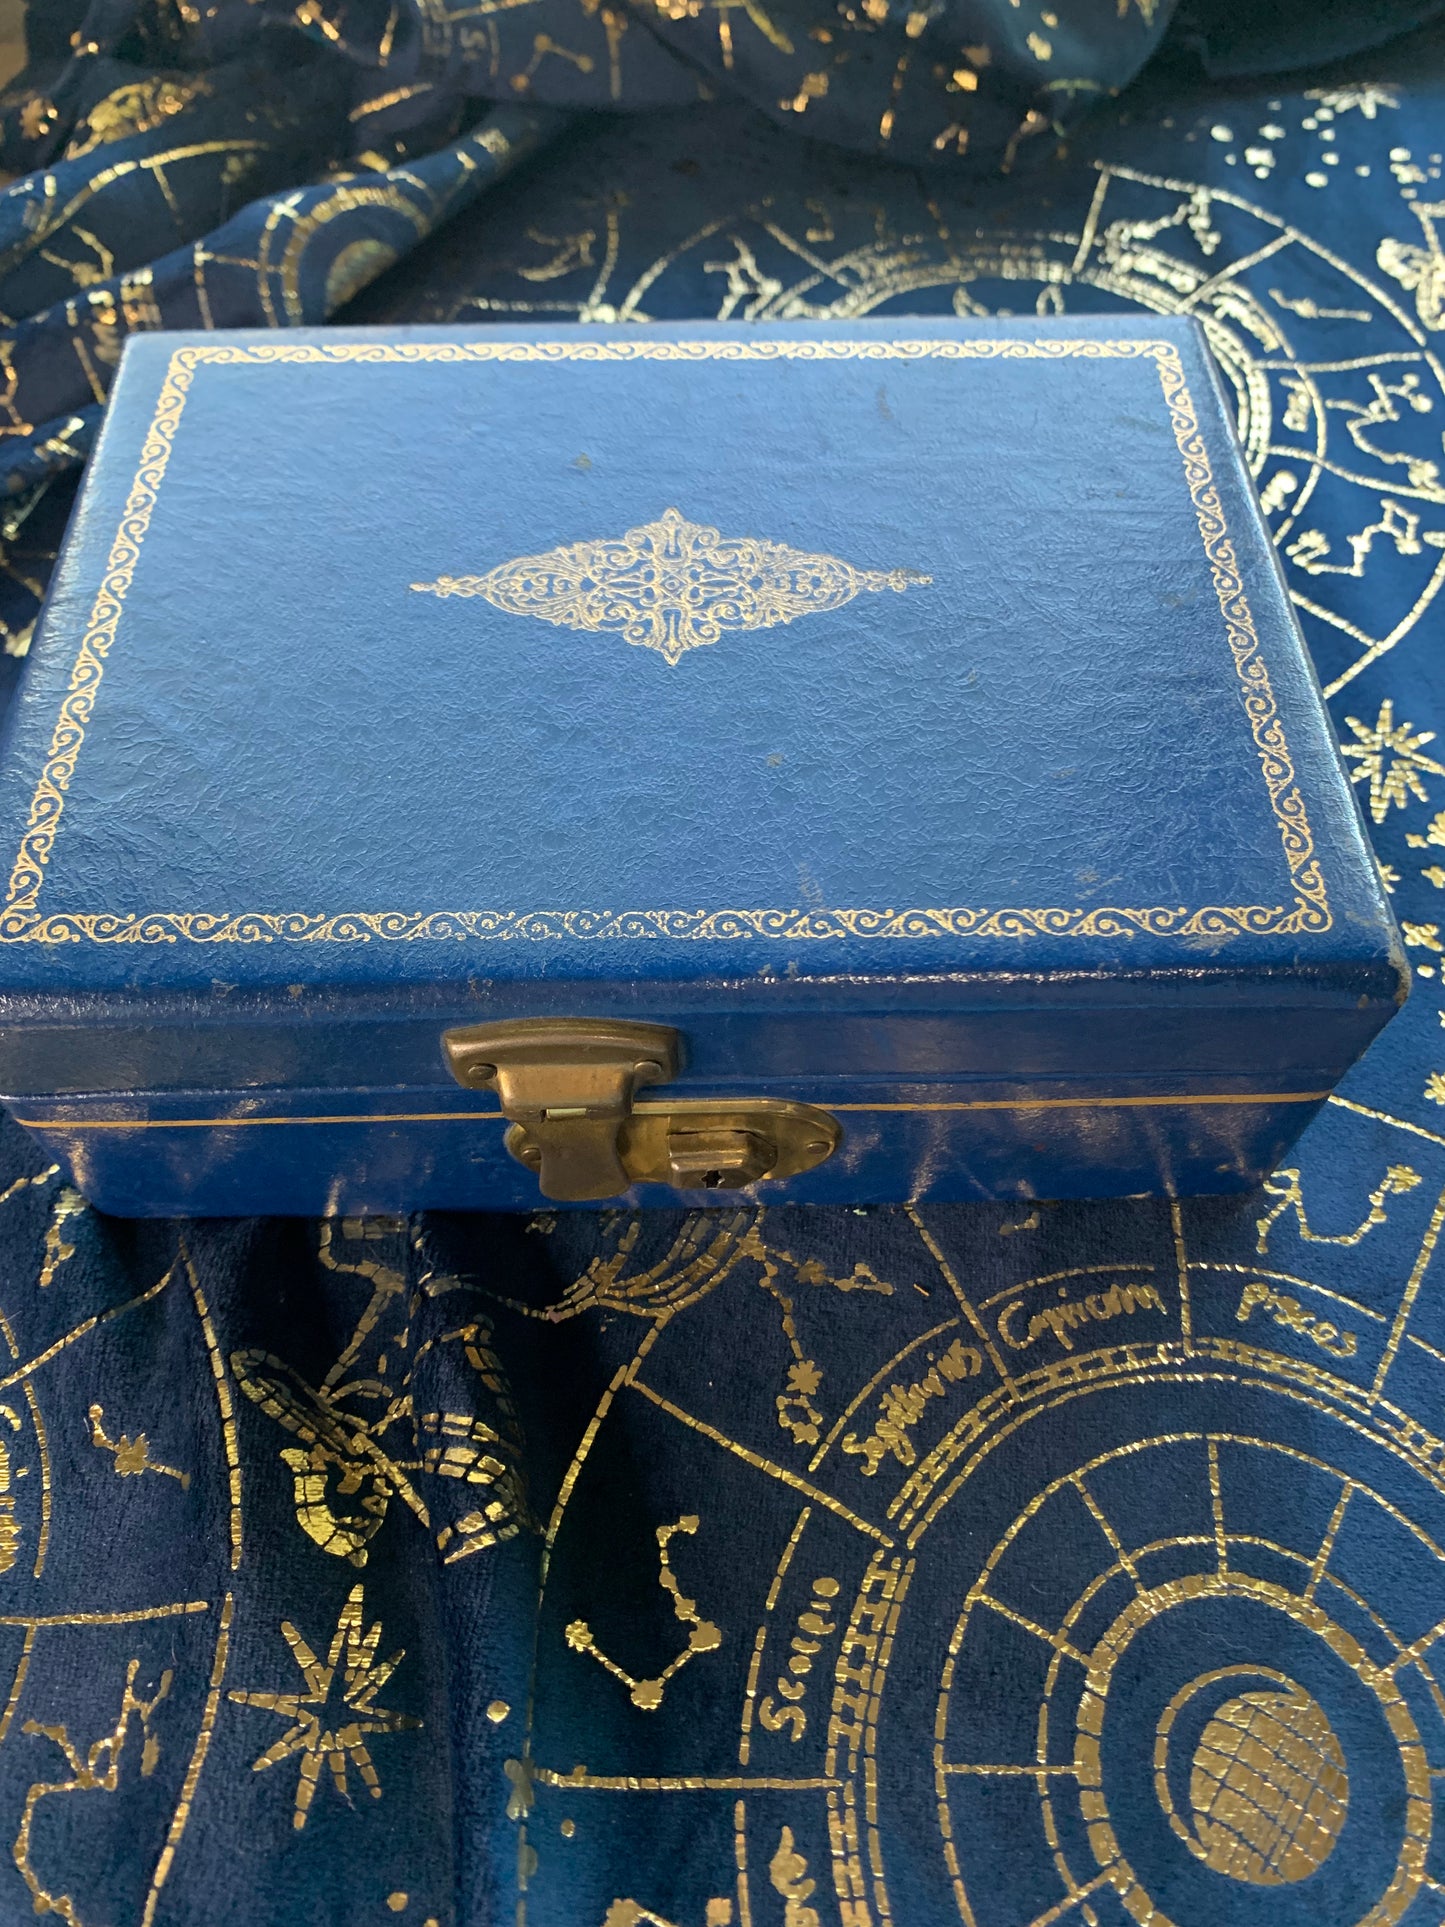 blue jewelry box